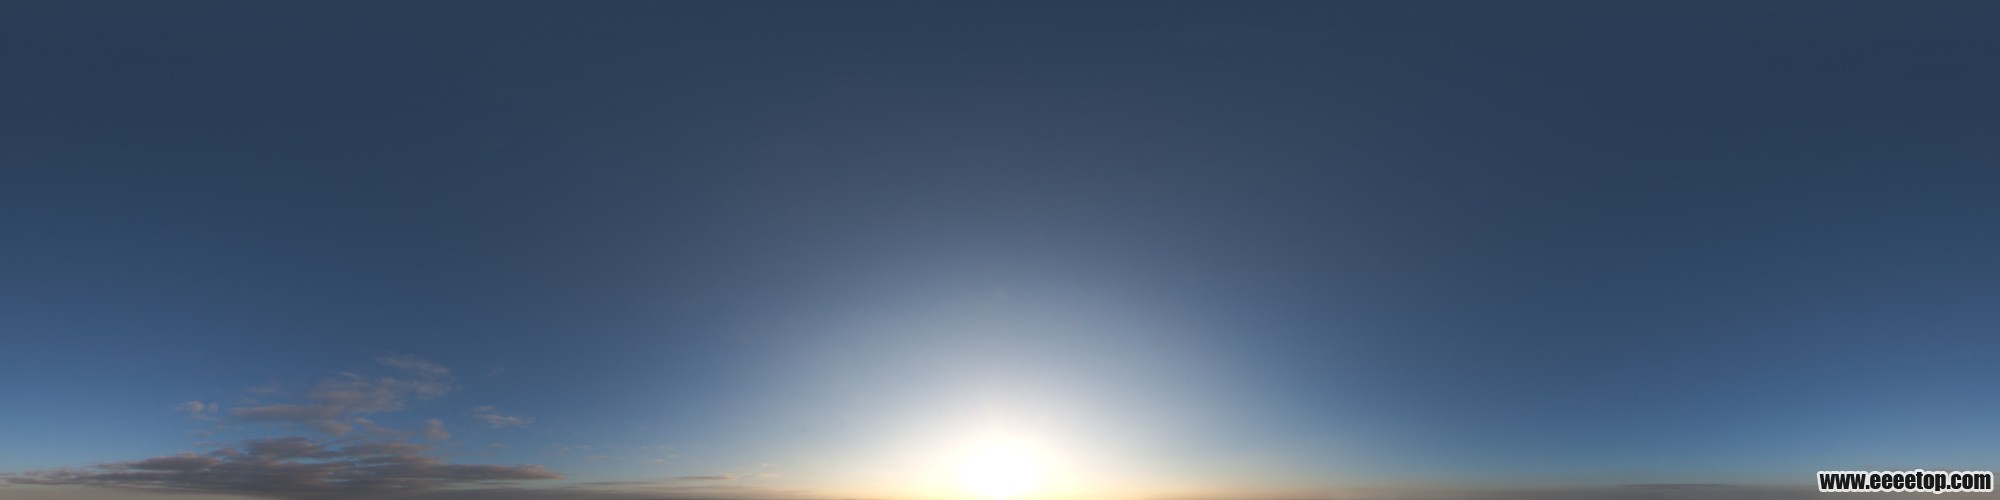 0907 Dawn Sun.jpg